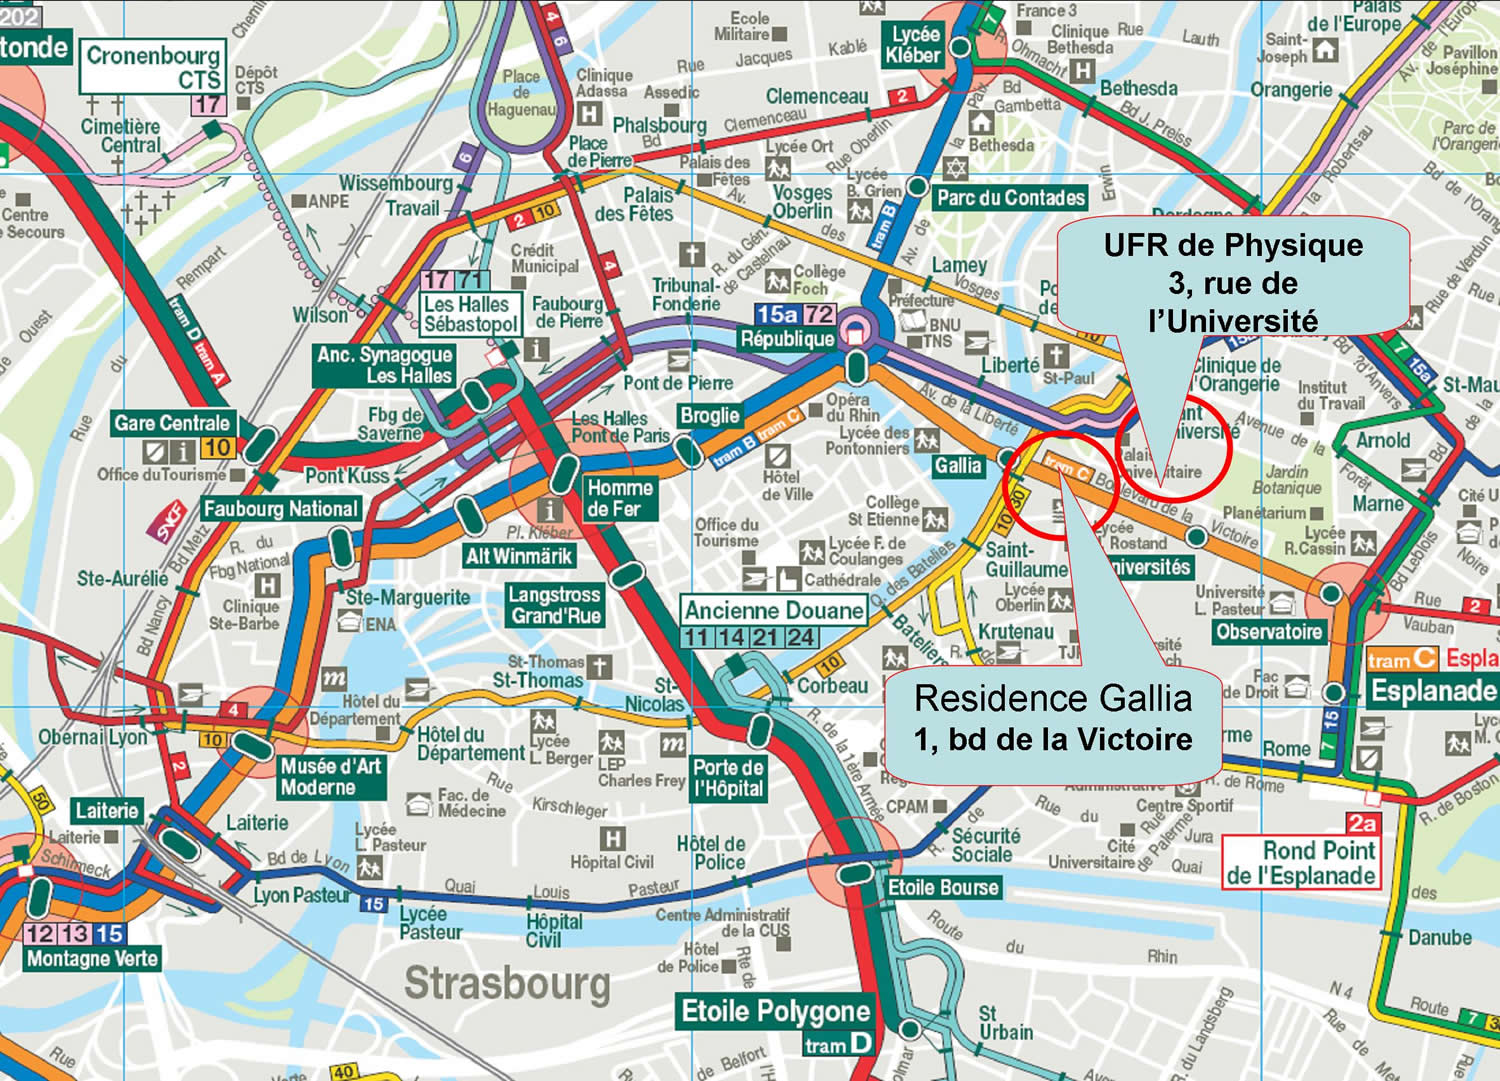 Strasbourg university plan